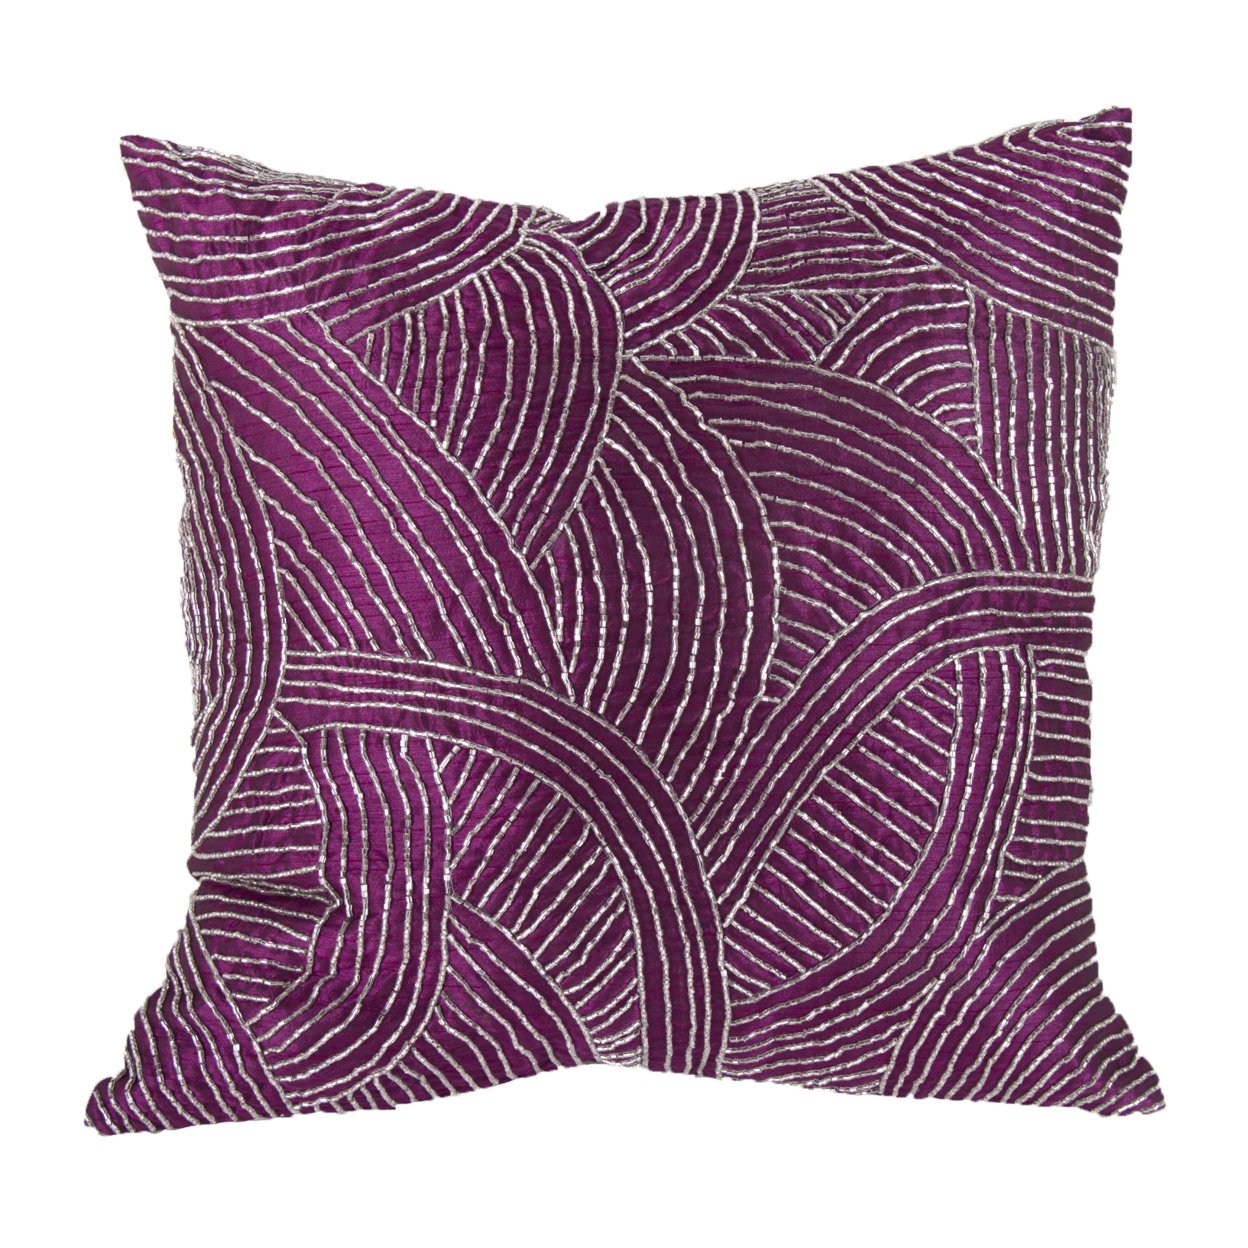 Contemporary Poly Silk Pillow With Geometric Design, Purple And Silver- Saltoro Sherpi